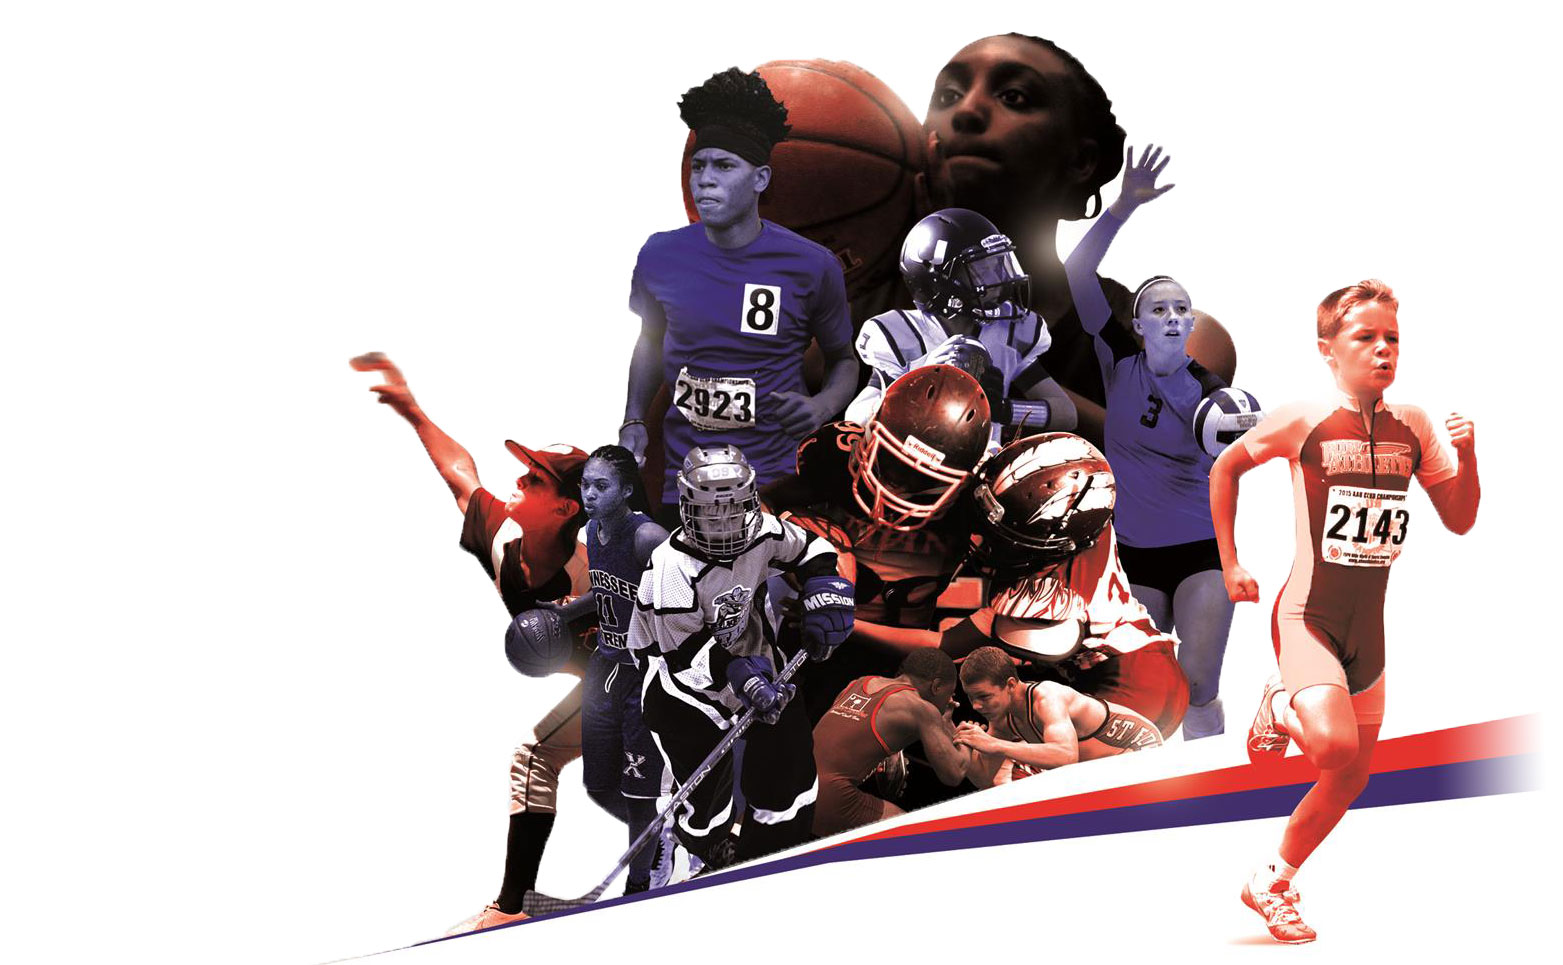 2022 World Athletics Championship Unveils Logo – SportsTravel